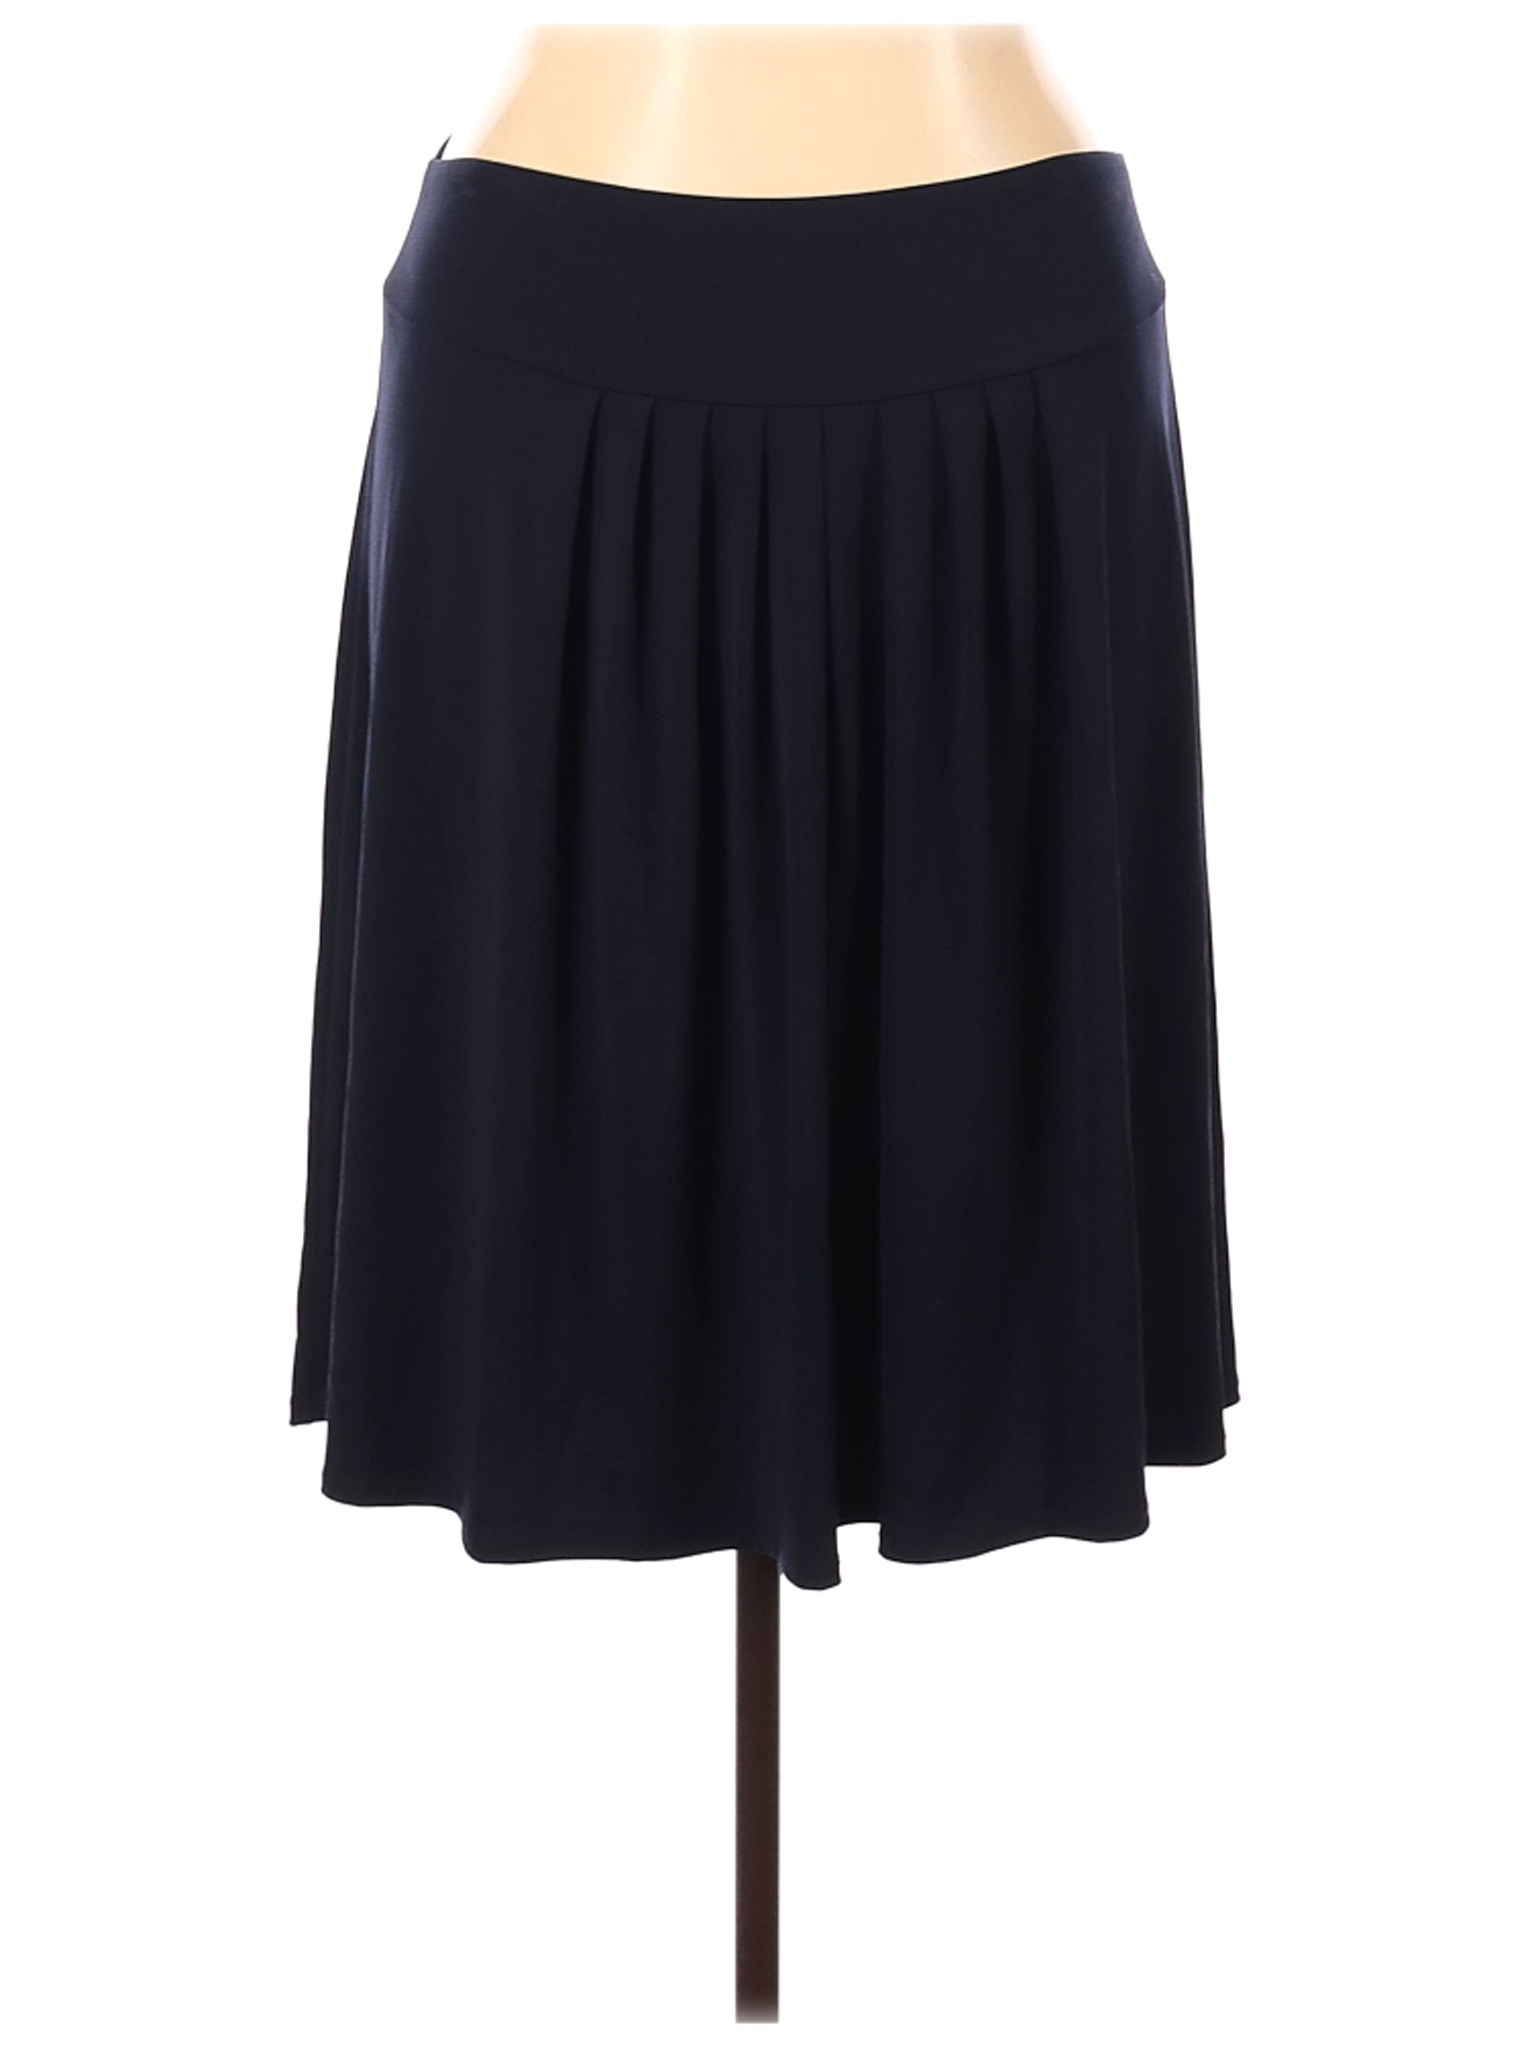 NWT George Women Black Casual Skirt XL | eBay